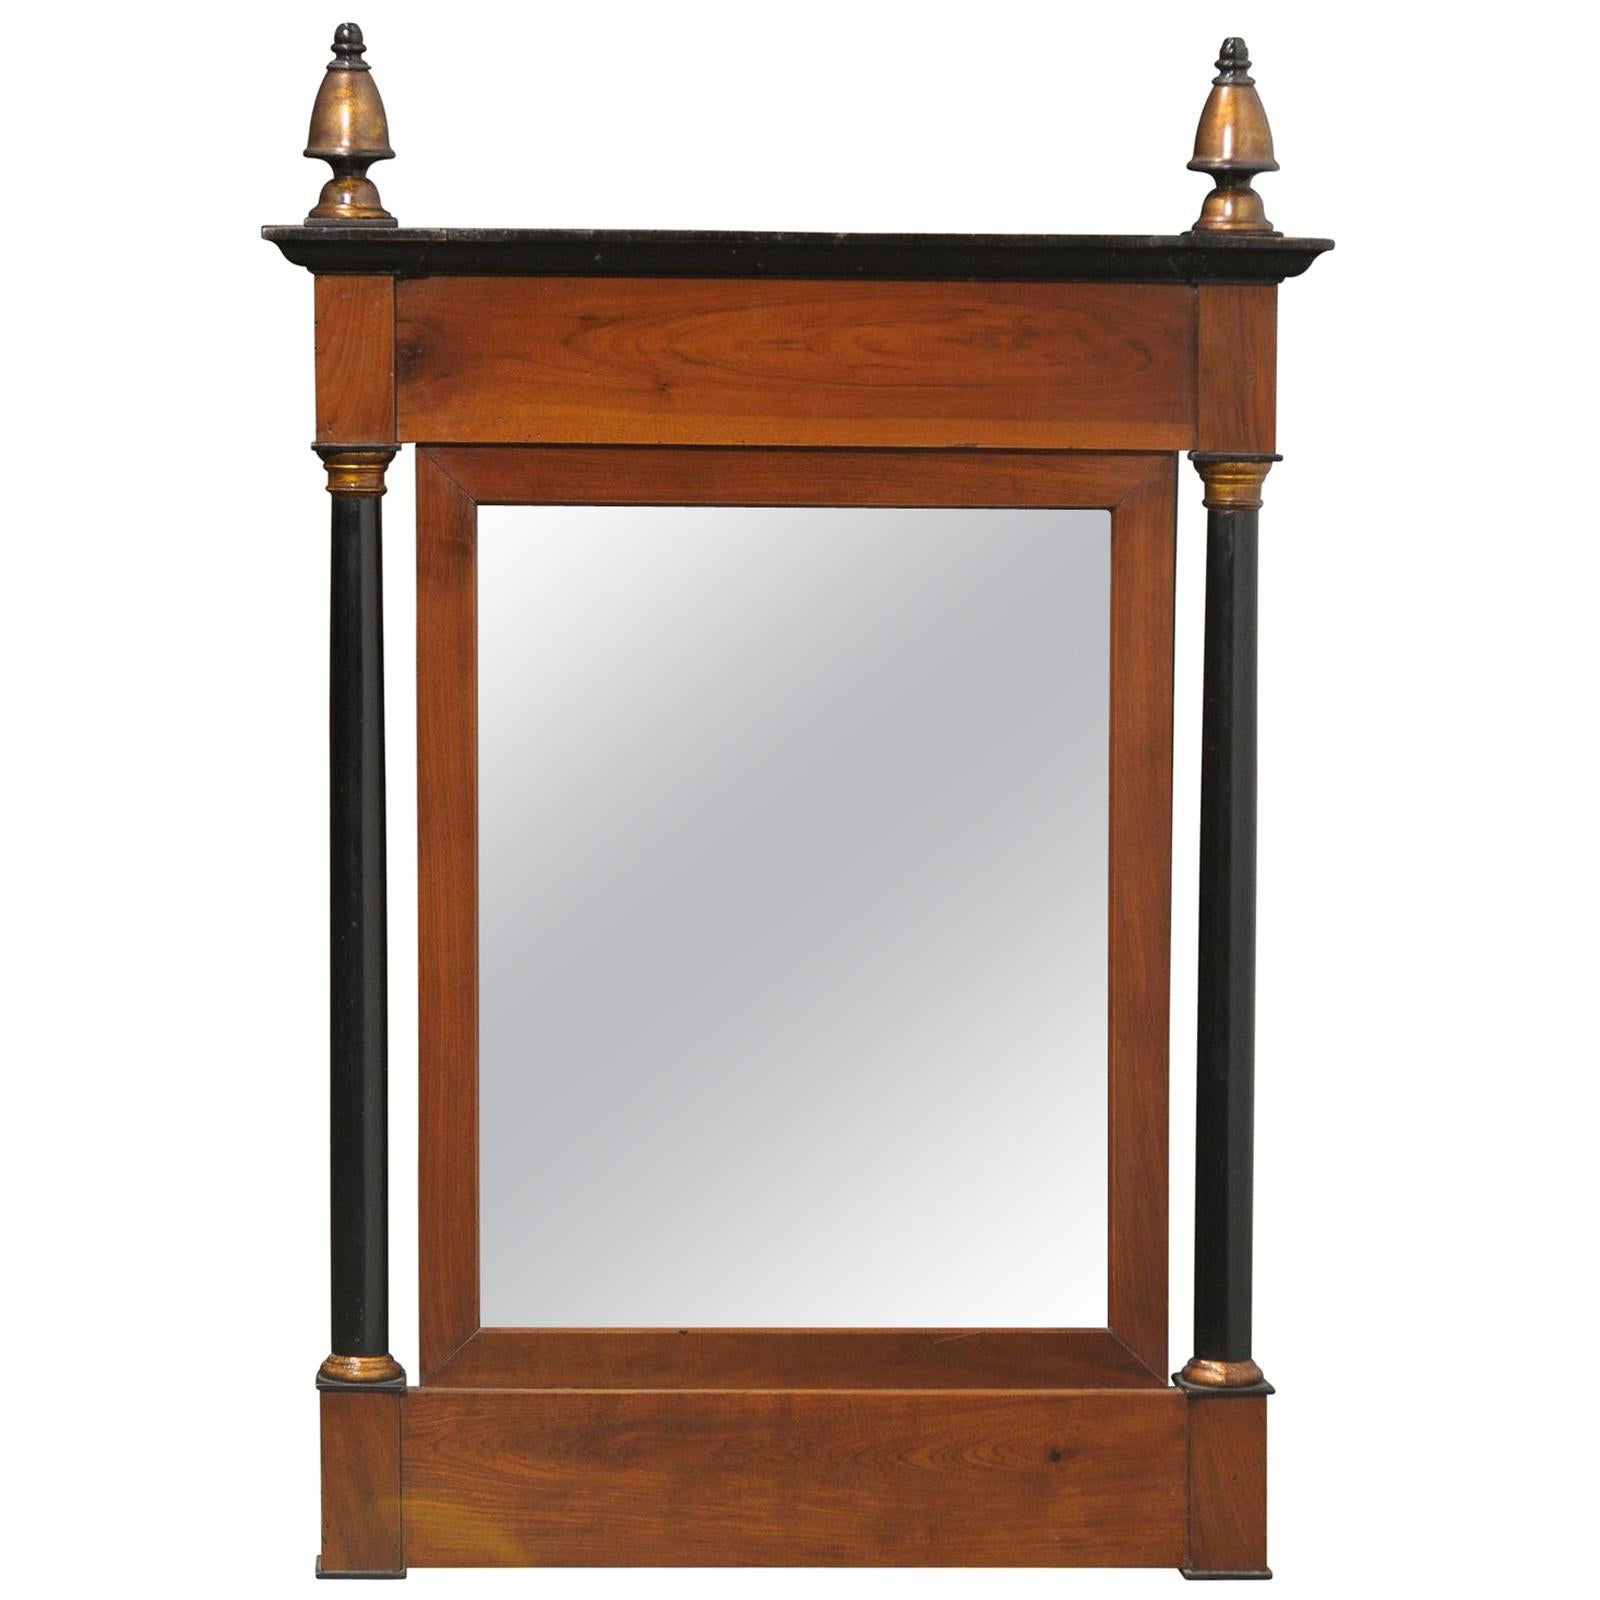 19th-20th Century Continental Wood Mirror